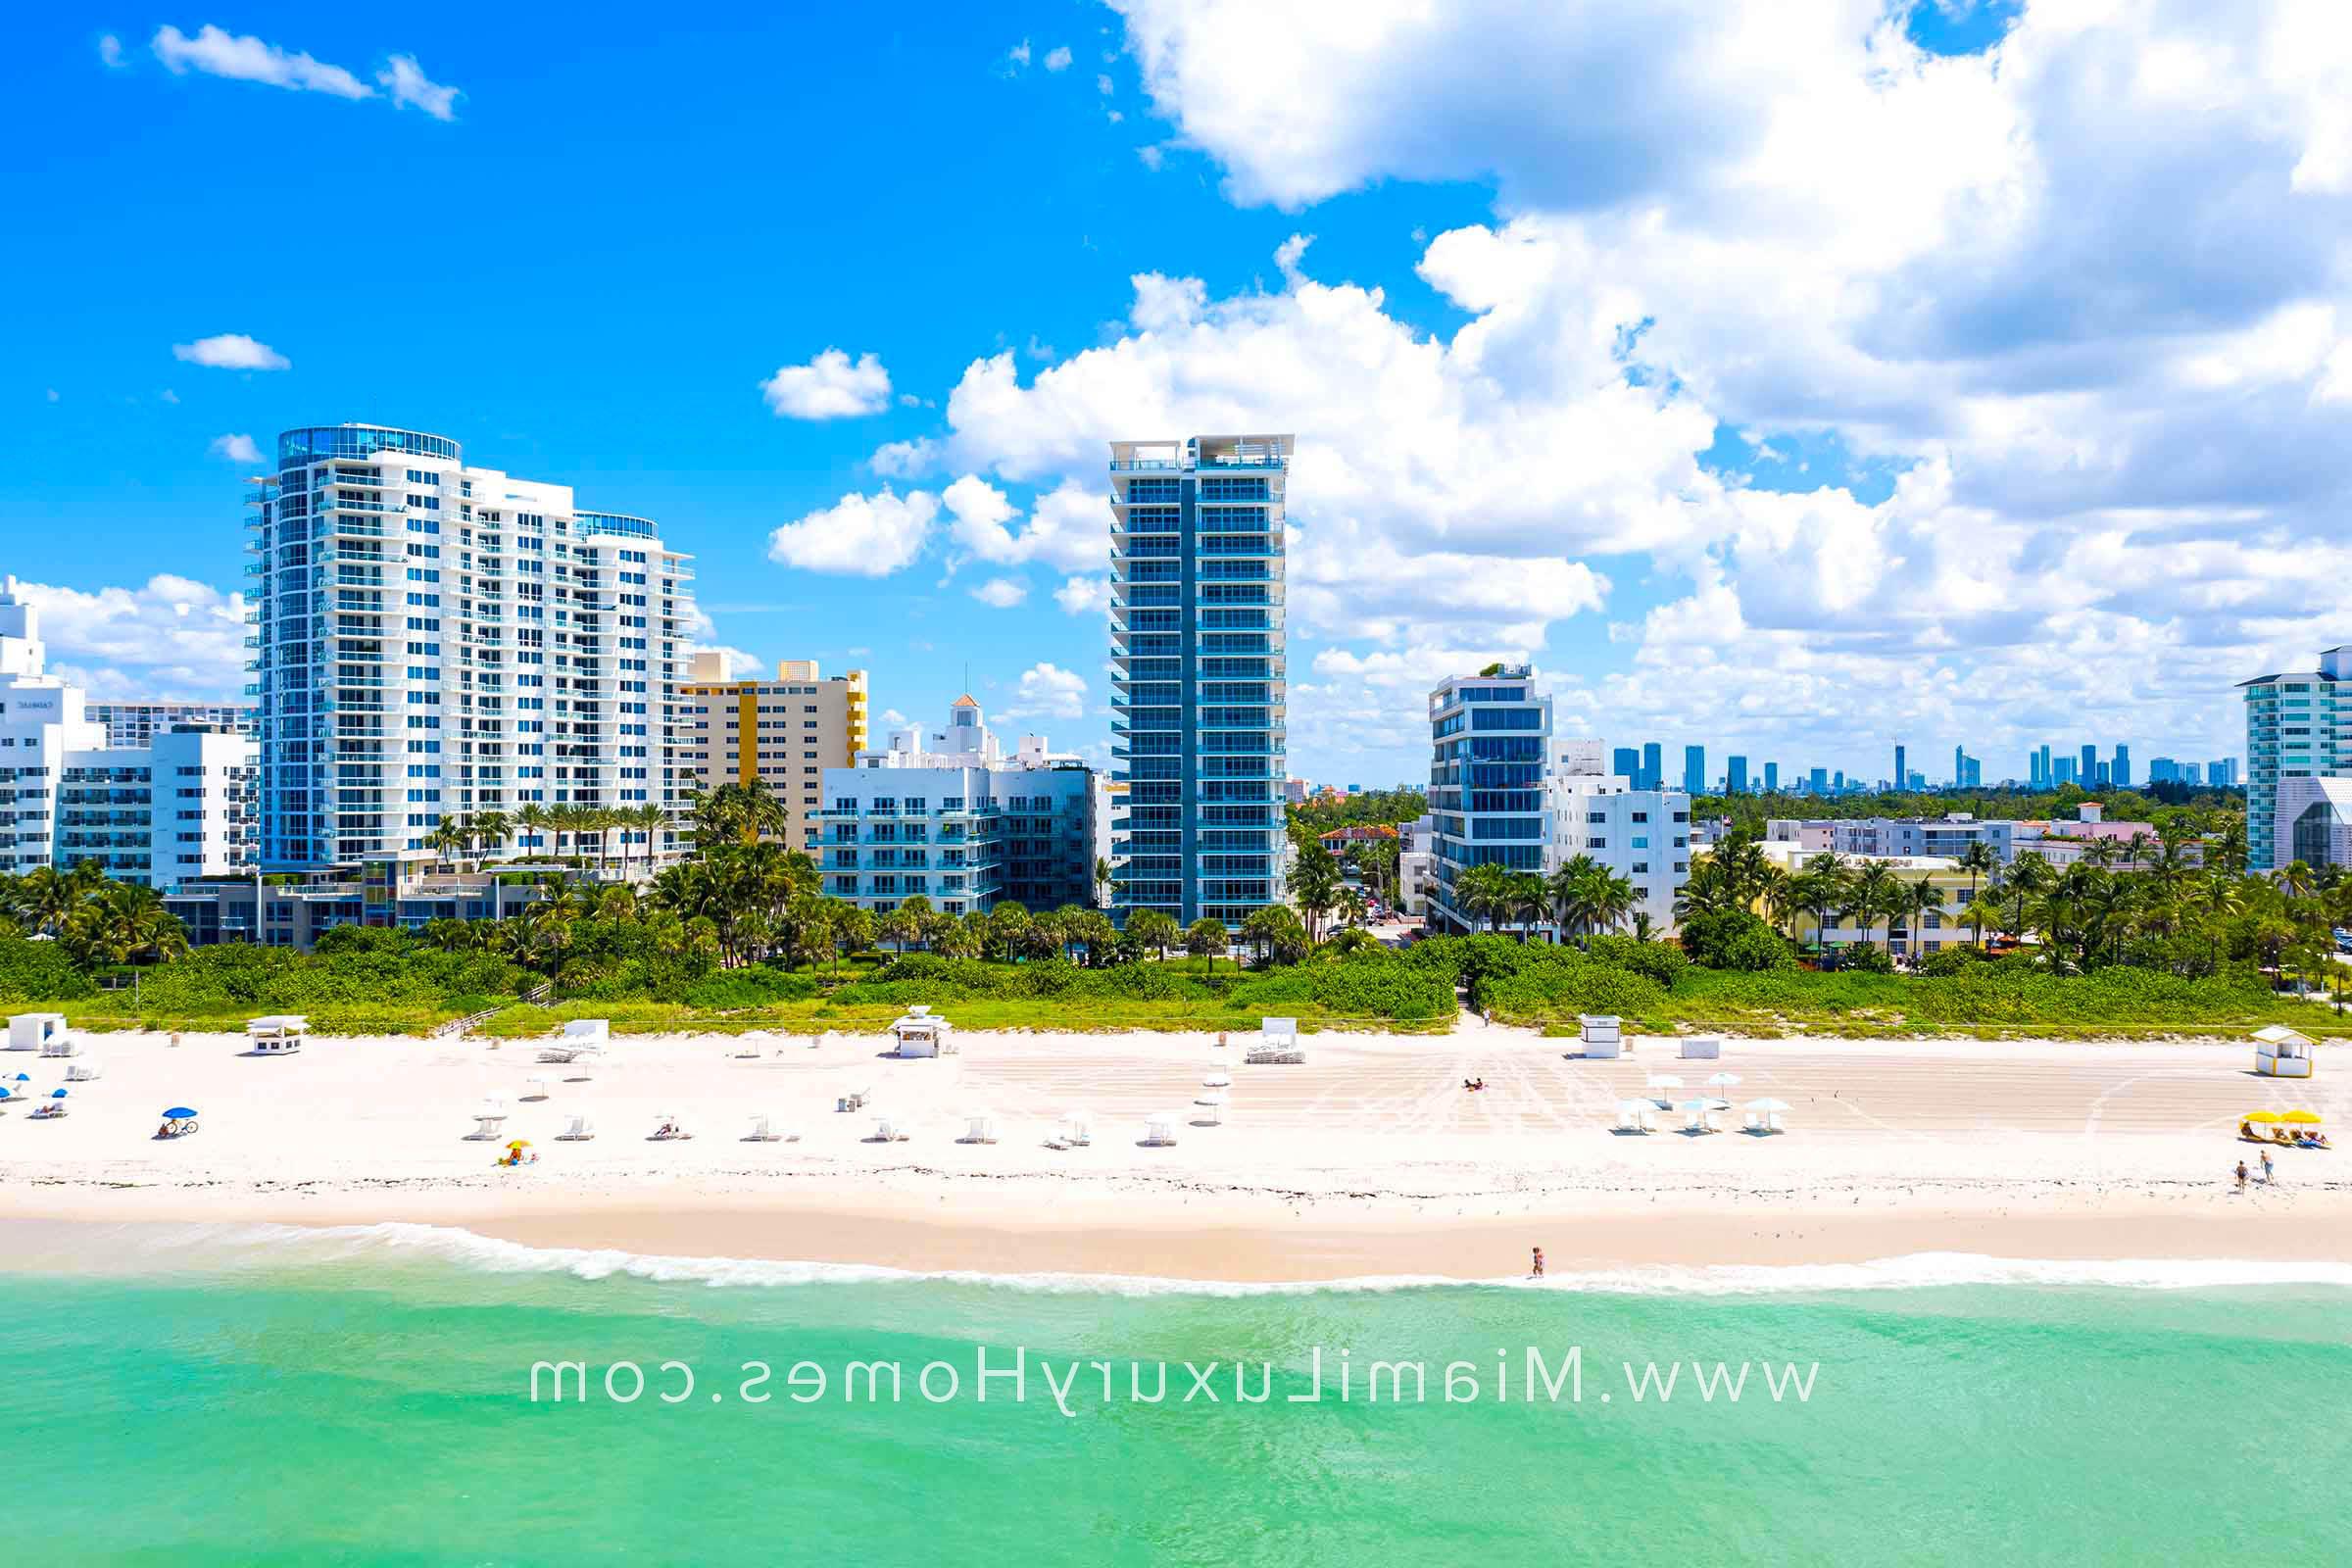 加勒比 Condo Building in Miami Beach